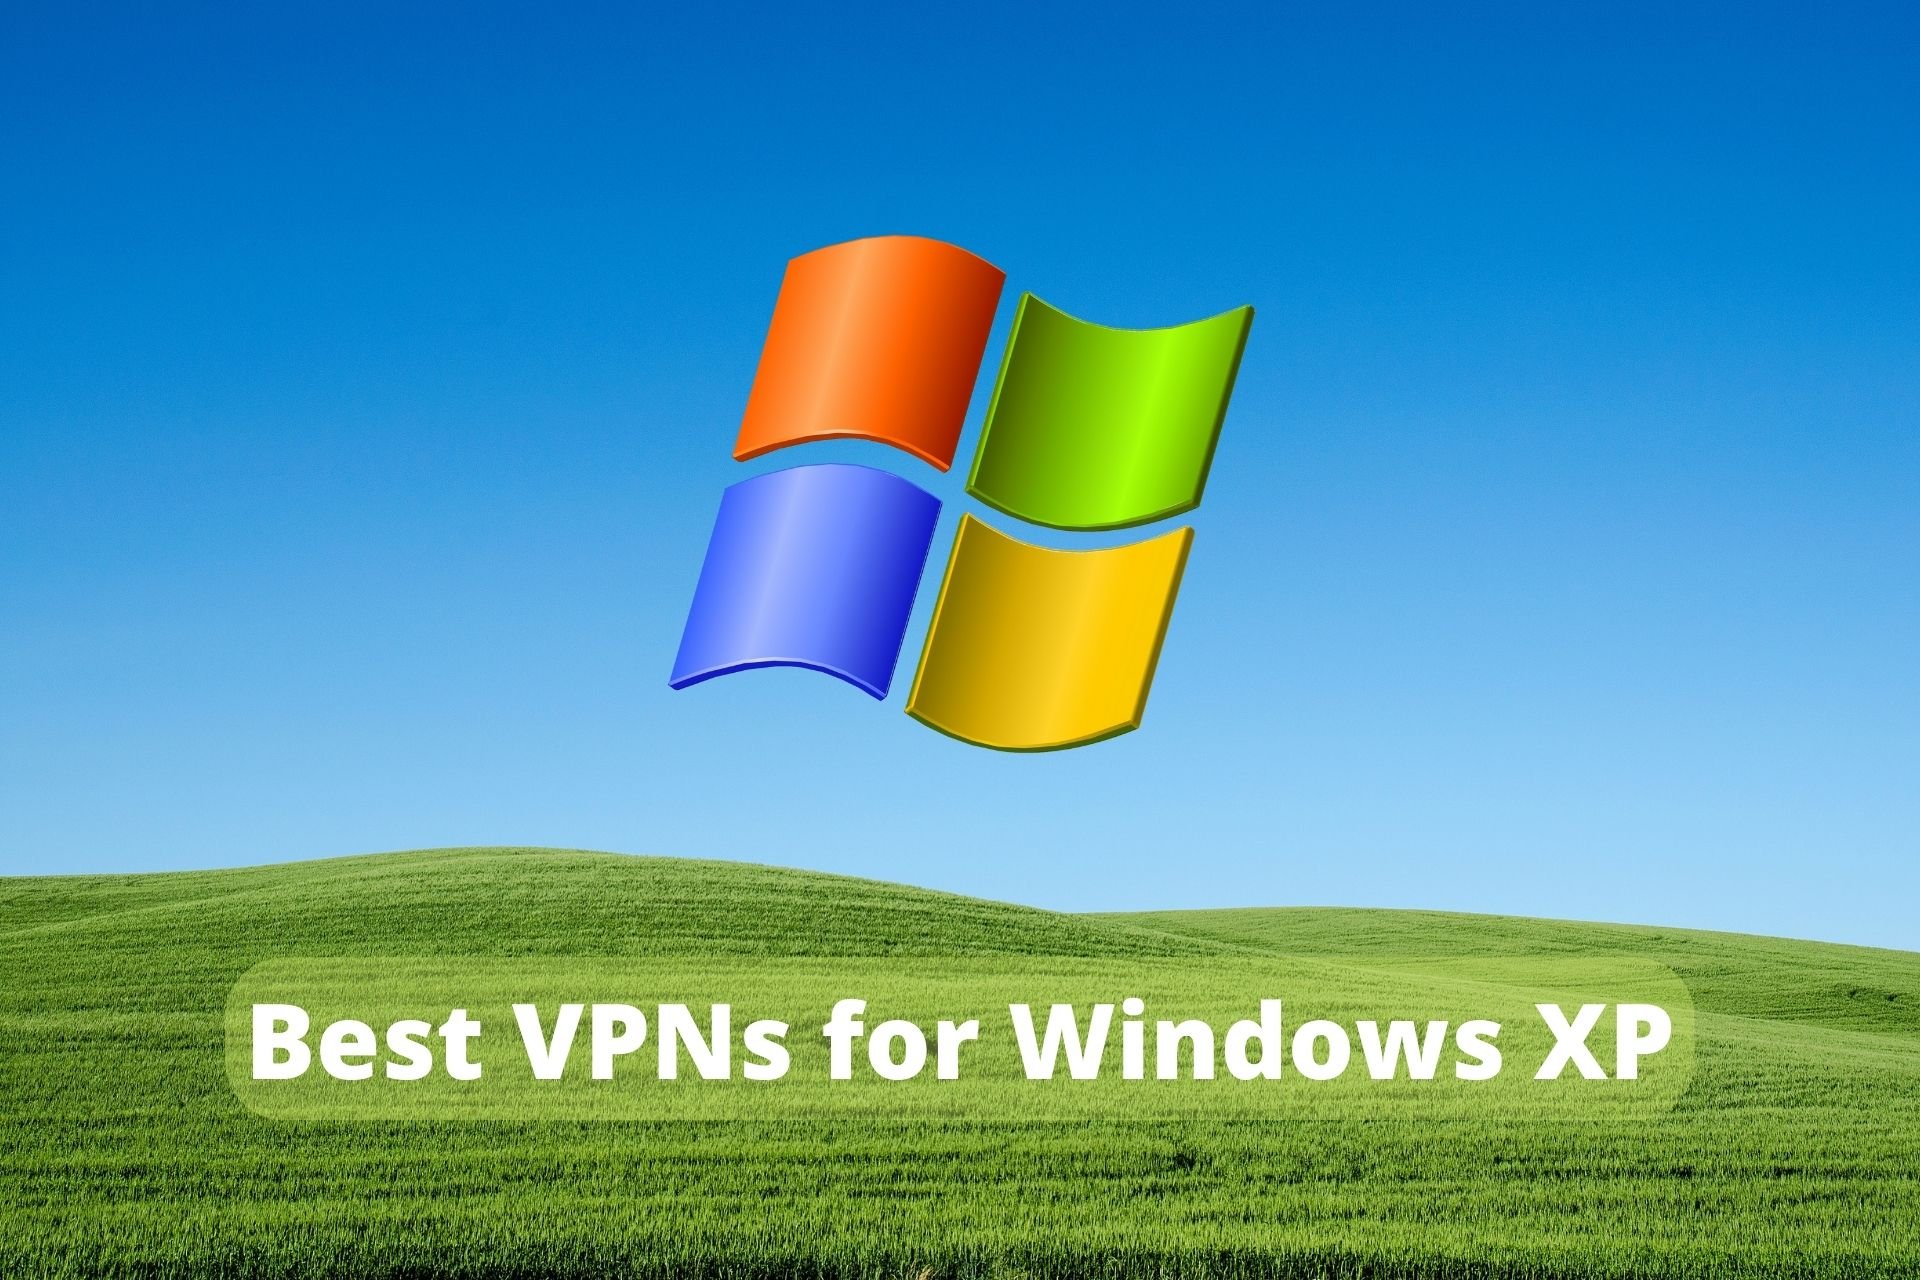 Best VPNs for WindowsXP